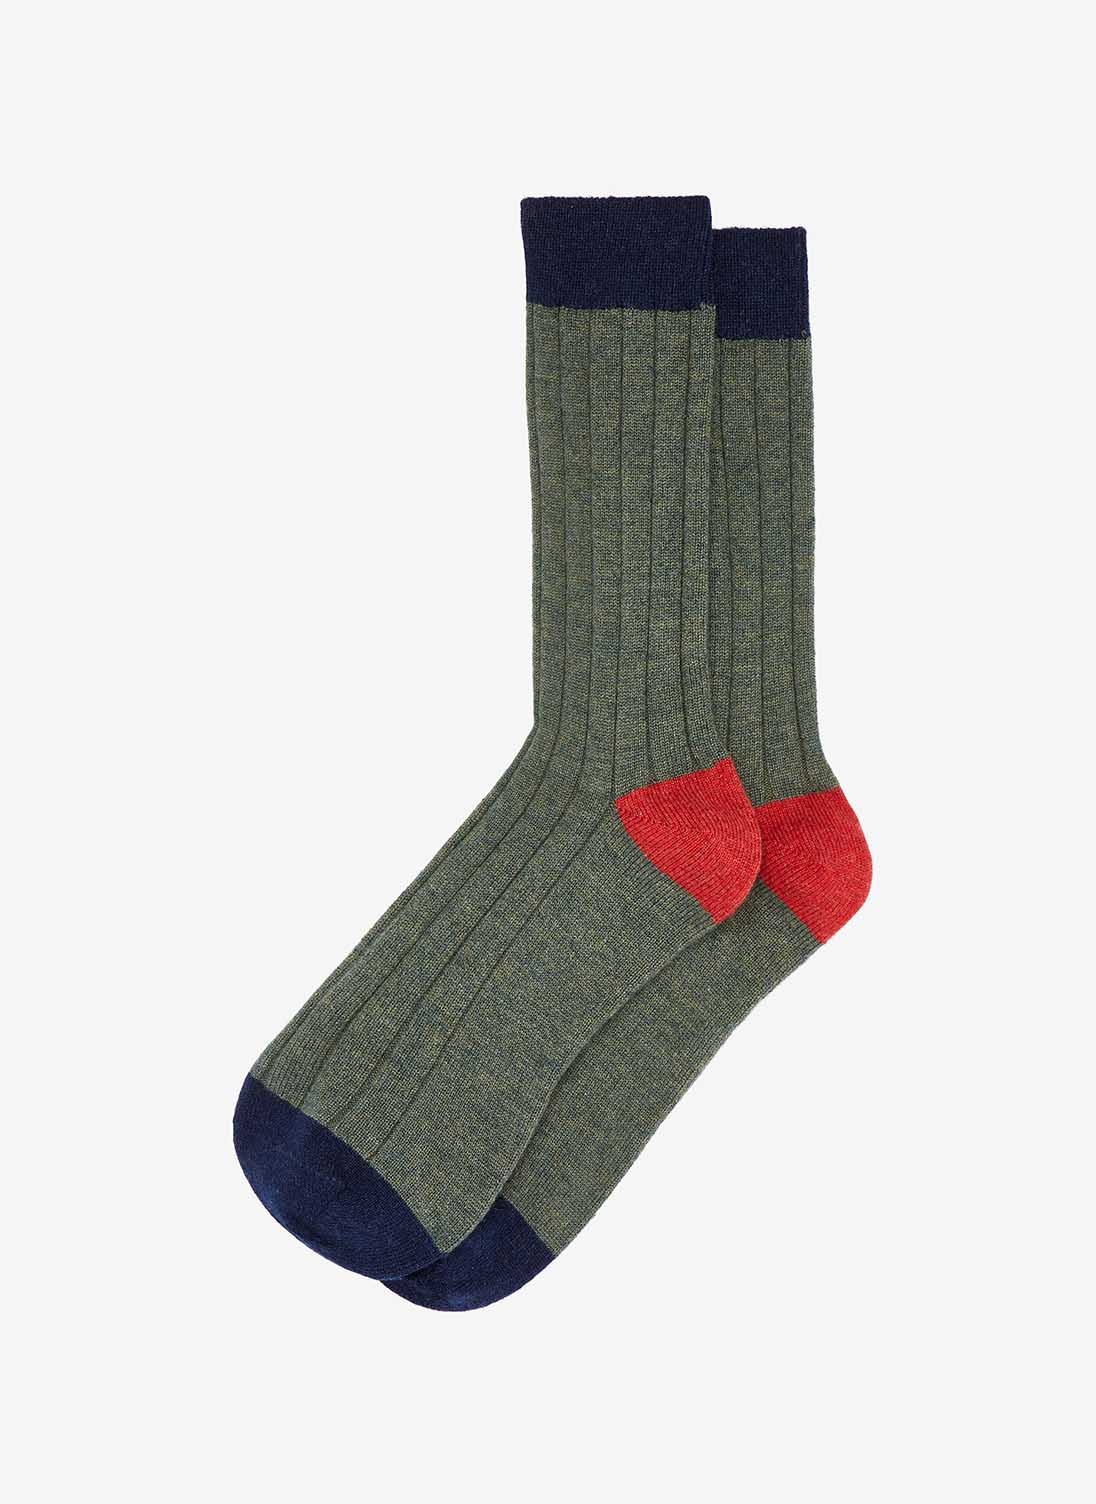 Men's Cashmere Patch Socks Olive